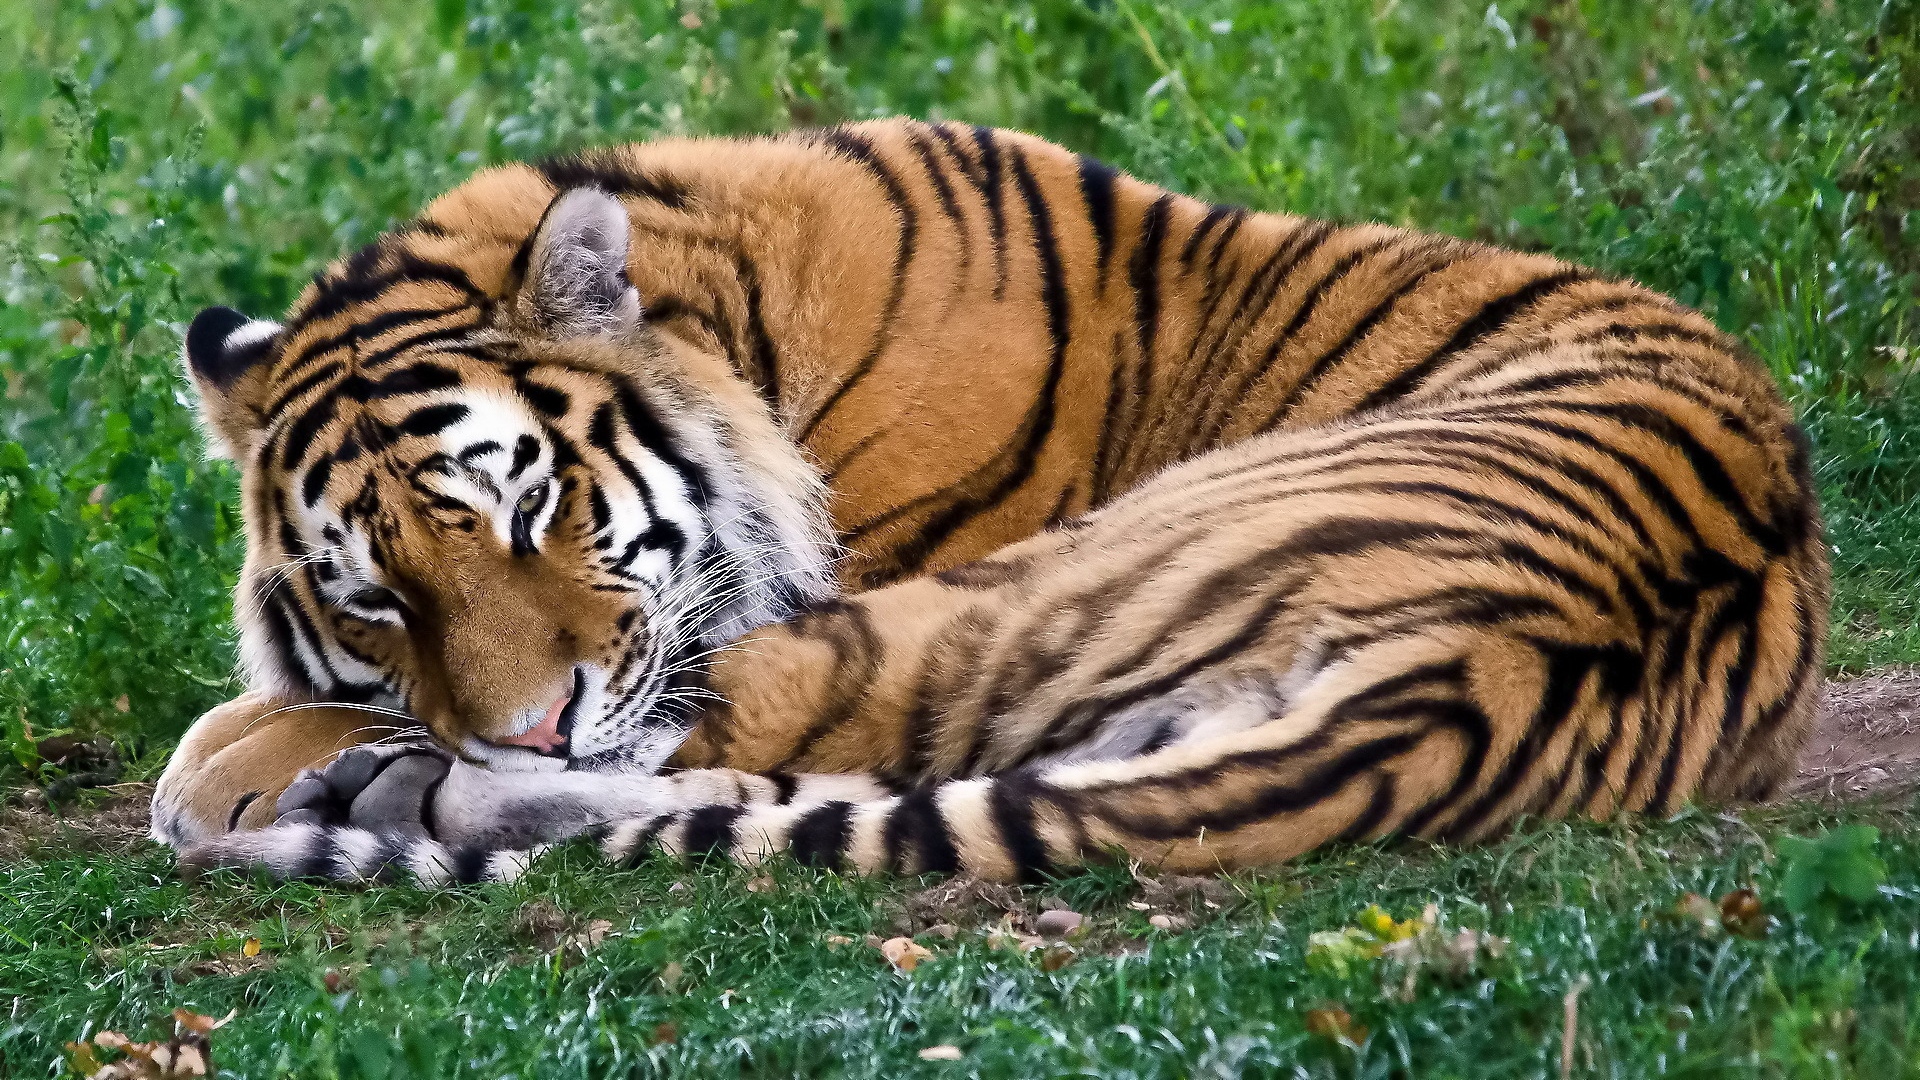 Wallpaper Tiger Sleepy Grass - Curled Up Sleeping Tiger - HD Wallpaper 